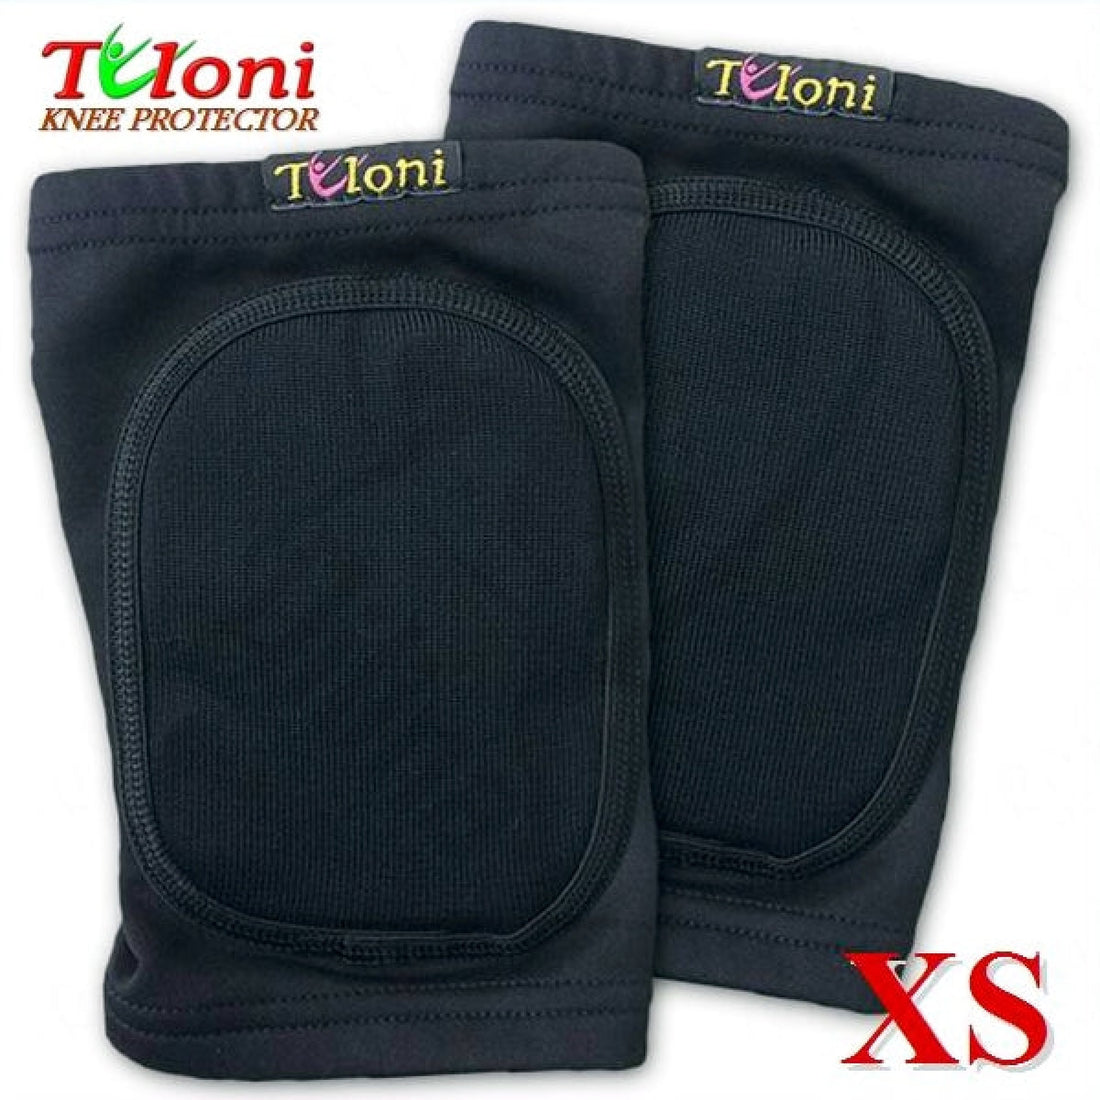 Tuloni Knee Protector Mod. T0131 Xs (4-8 Years) Protectors